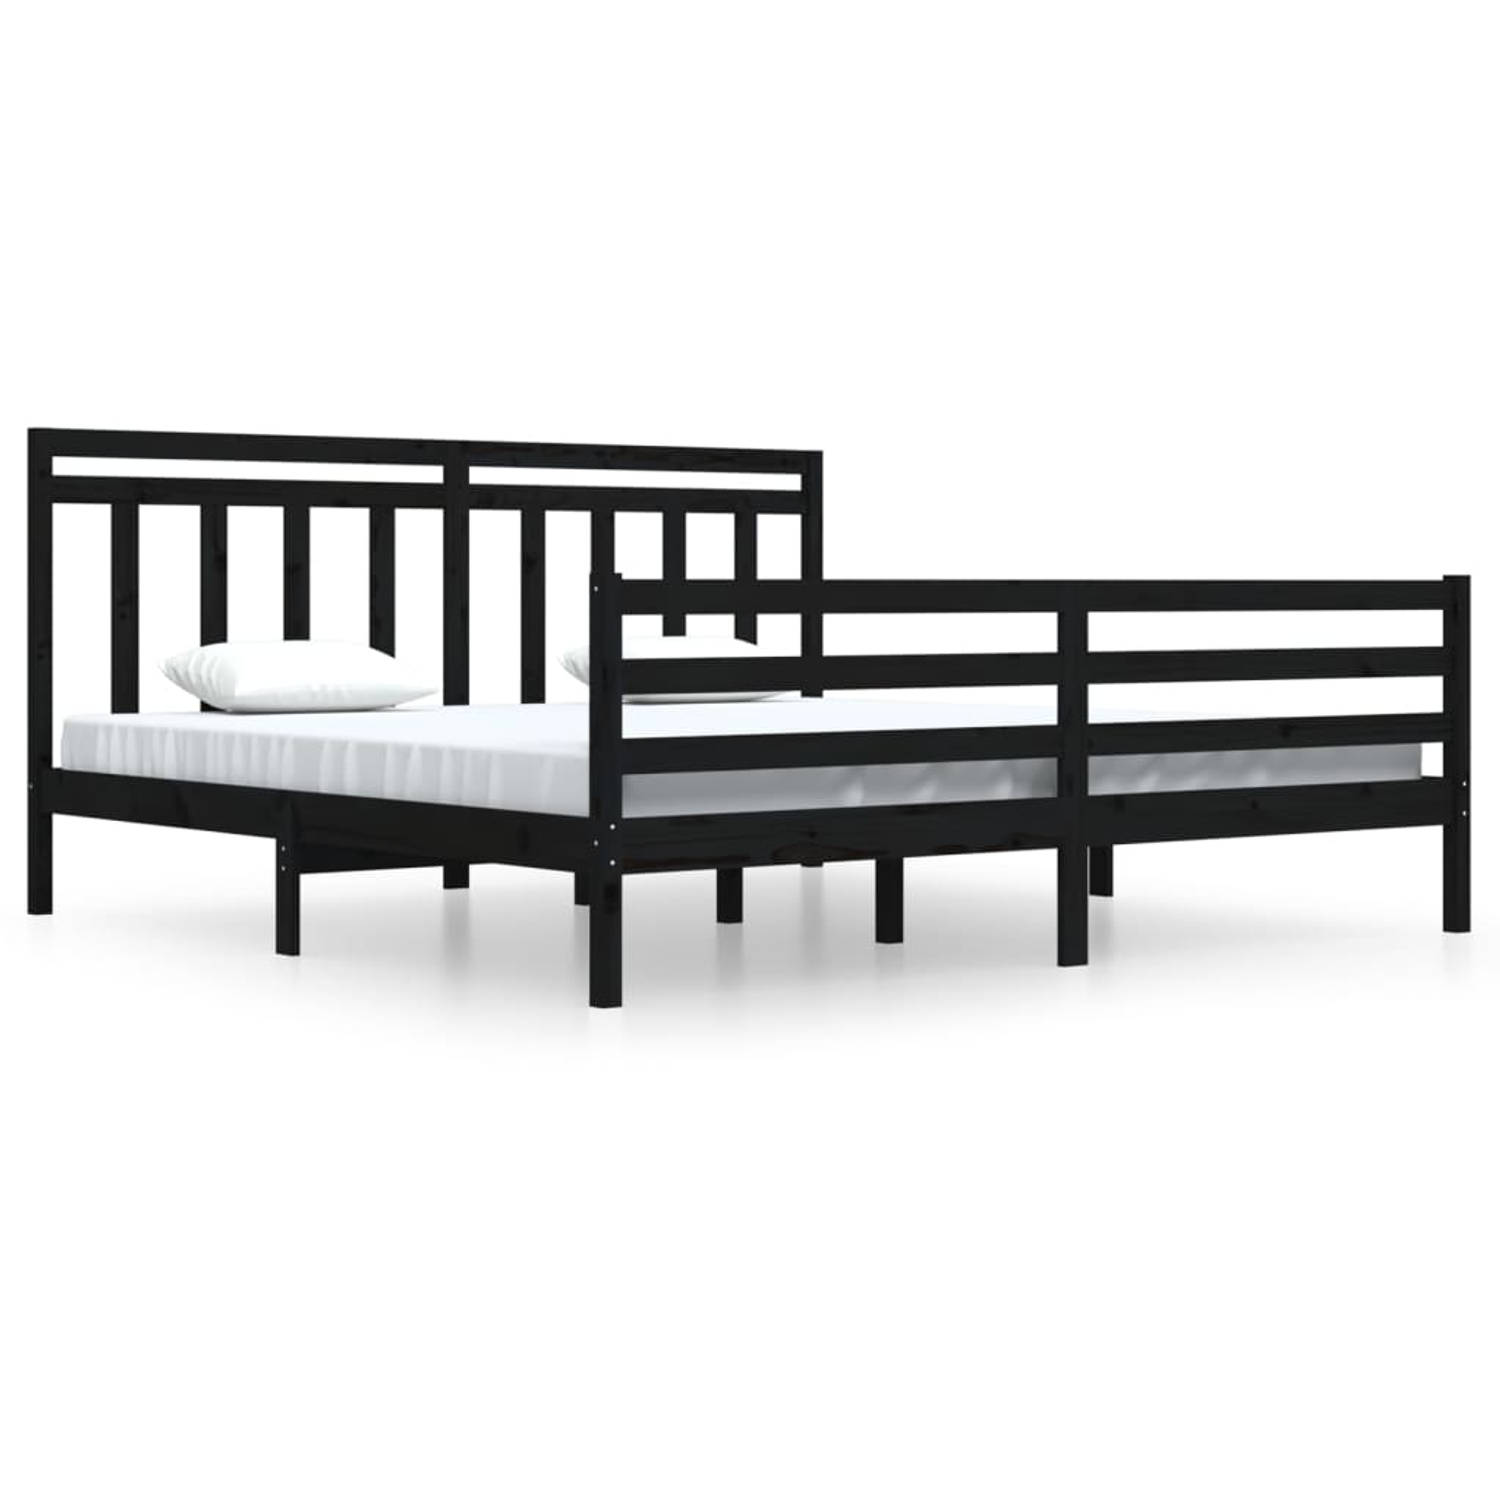 The Living Store Bedframe massief hout zwart 200x200 cm - Bedframe - Bedframes - Tweepersoonsbed - Bed - Bedombouw - Dubbel Bed - Frame - Bed Frame - Ledikant - Houten Bedframe - T